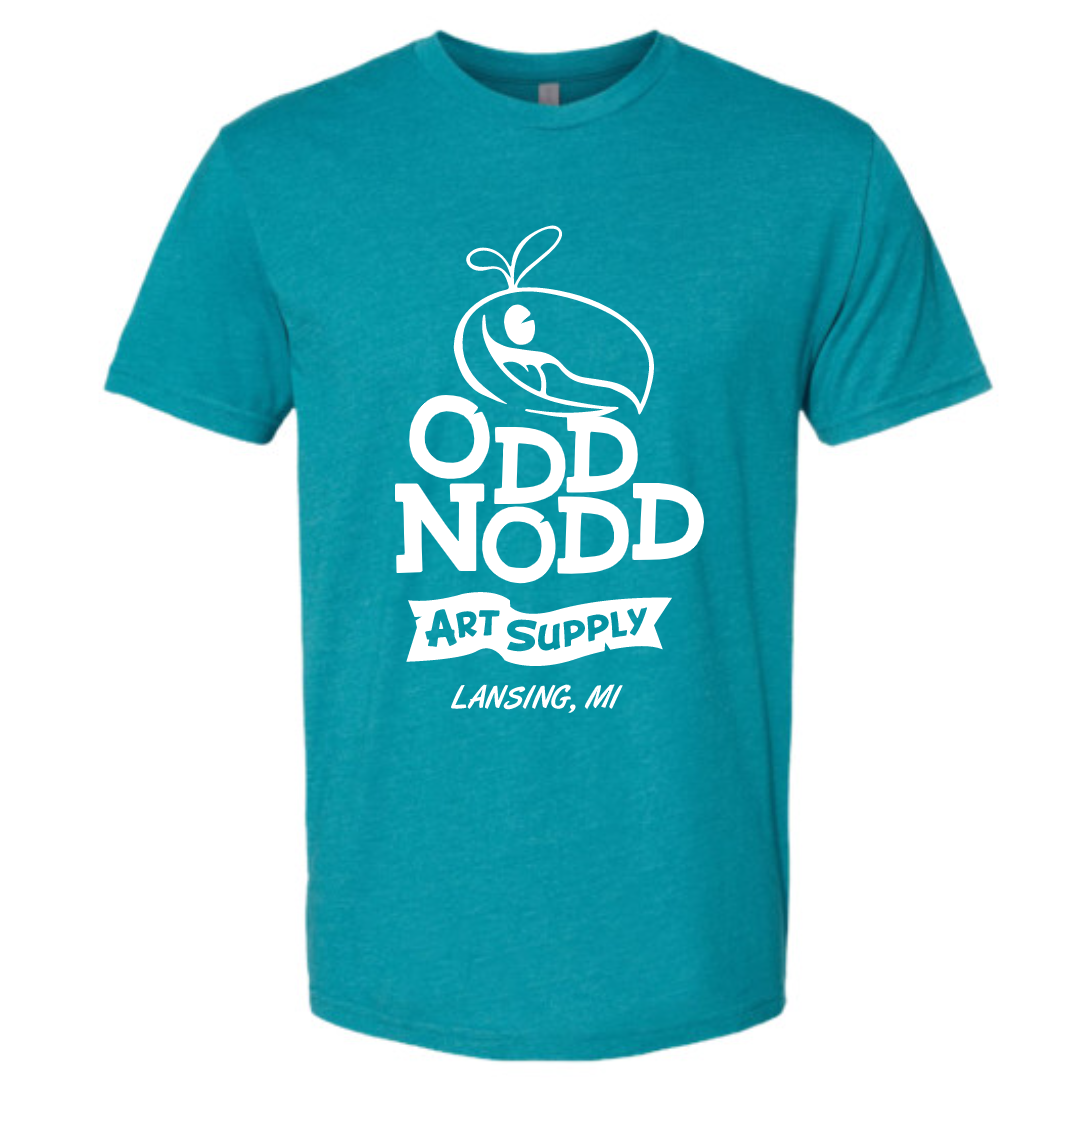 Teal Odd Nodd Art Supply T-Shirt